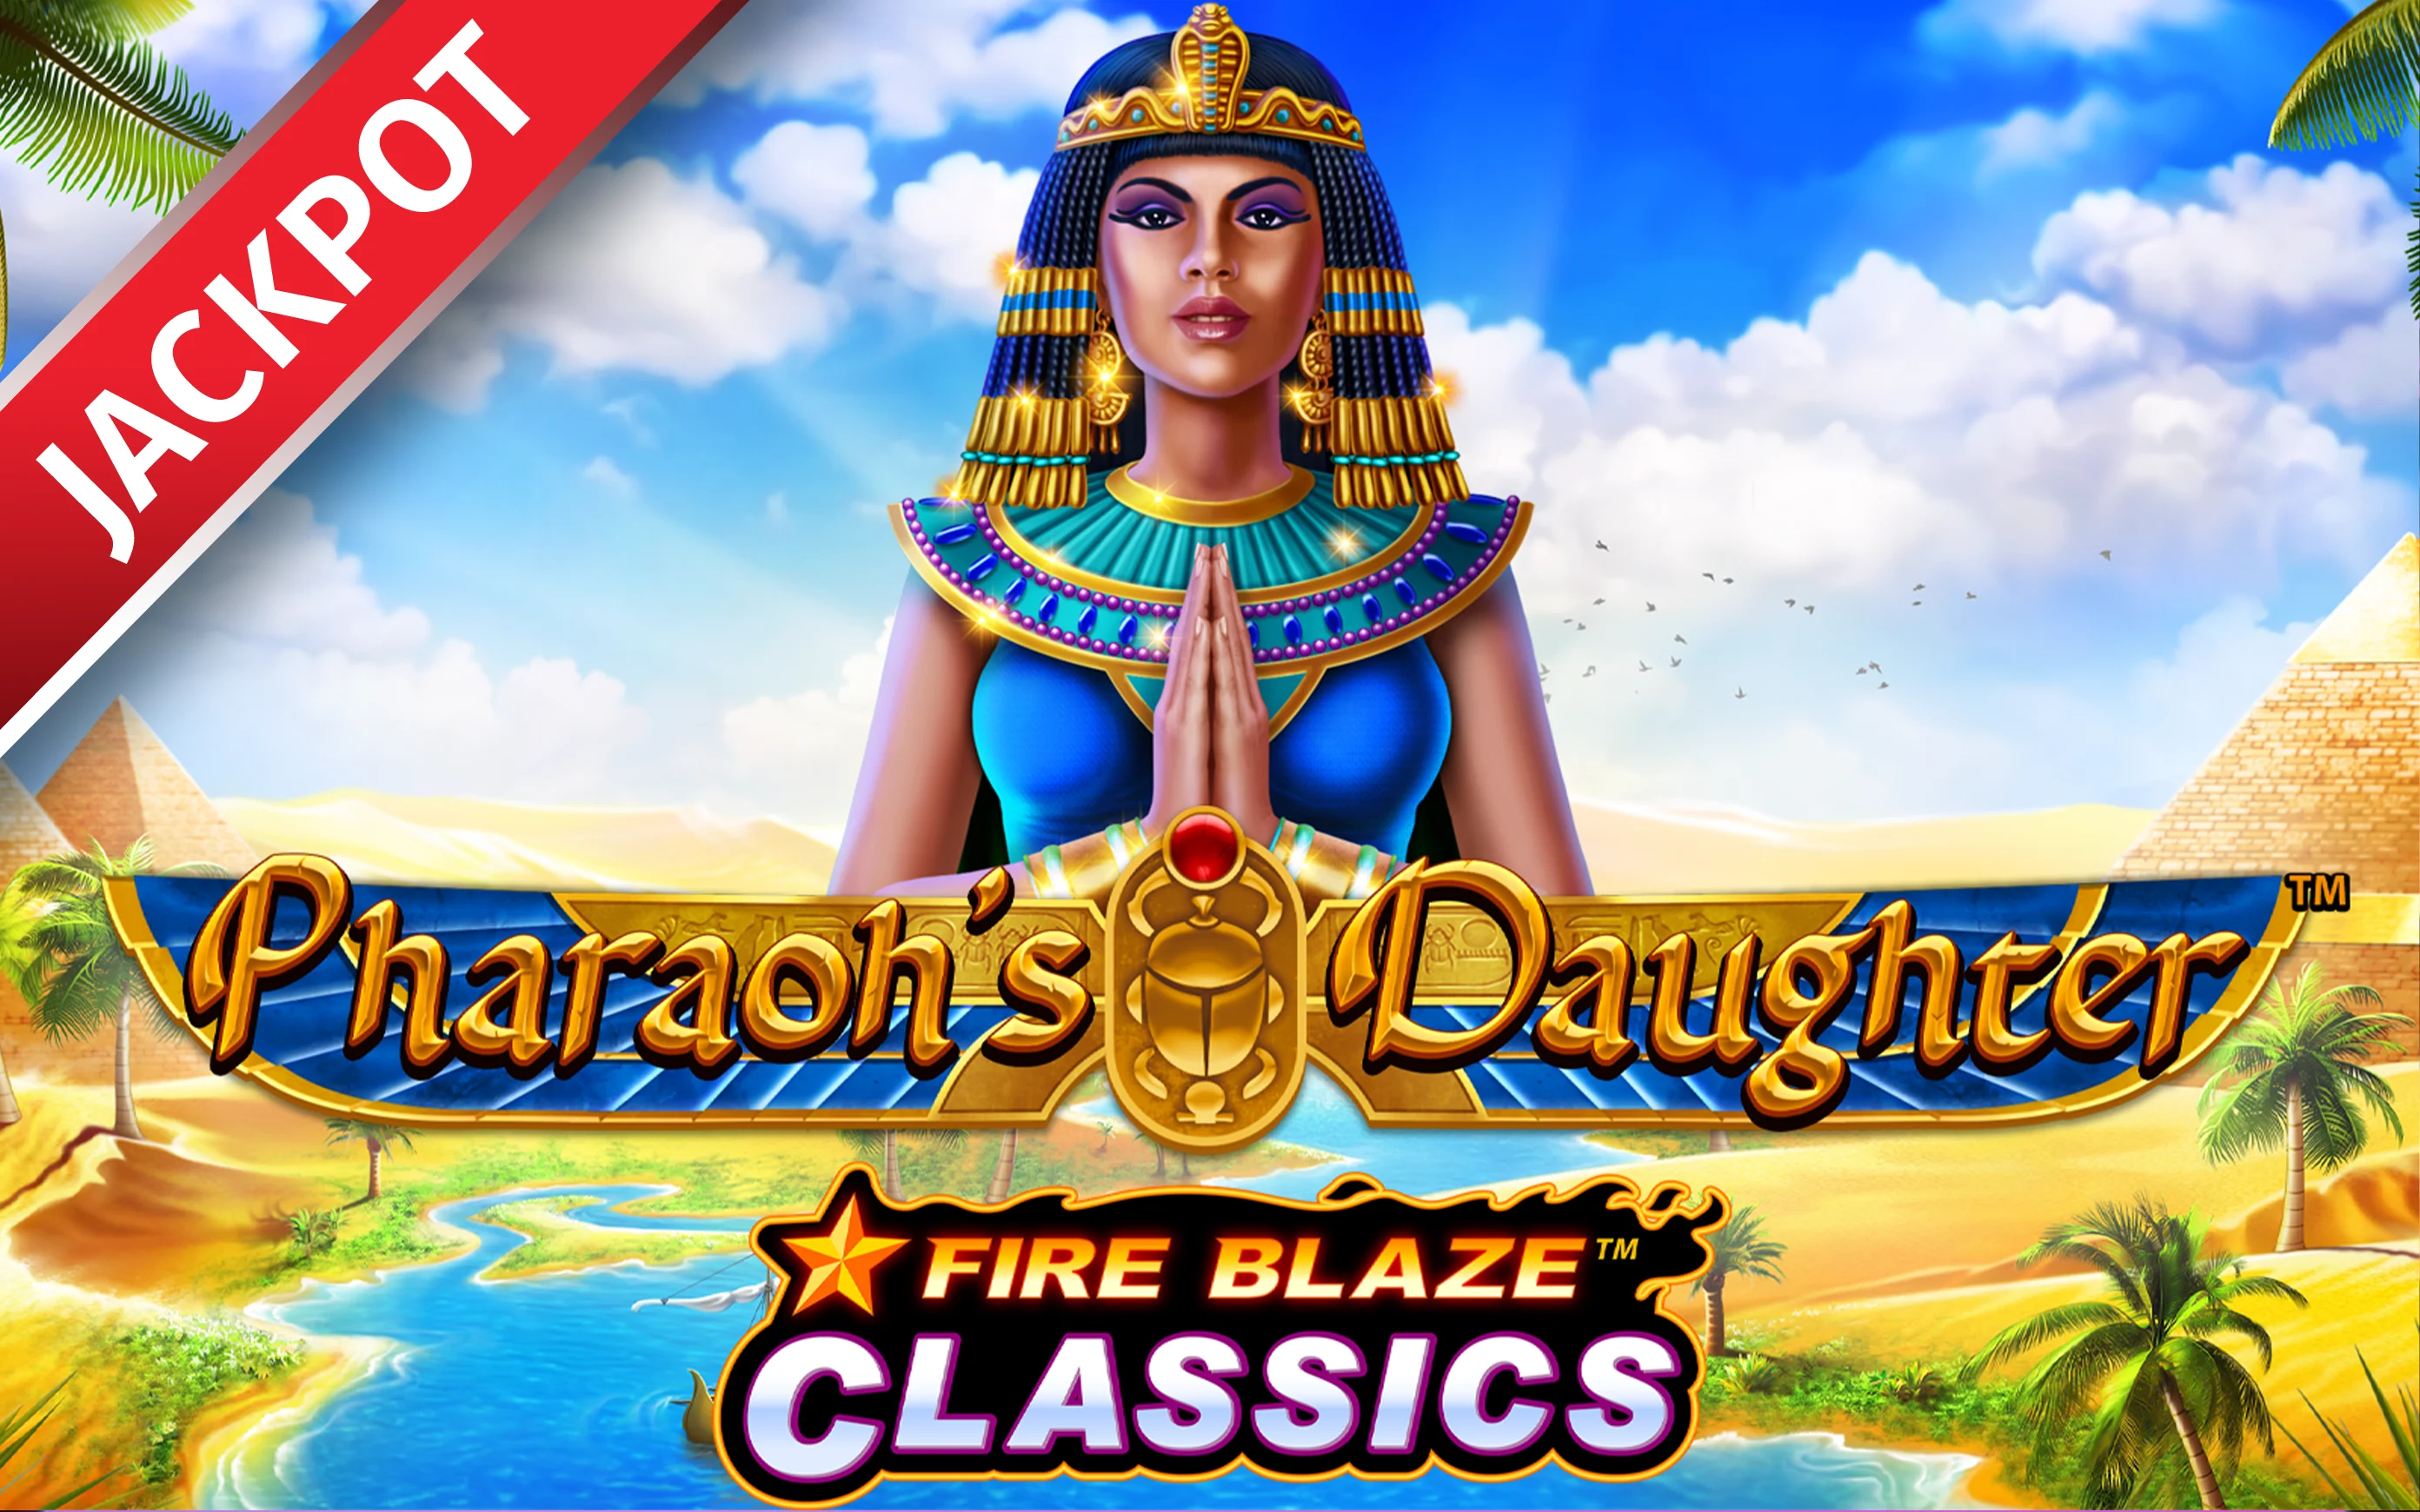 Play Fire Blaze: Pharaohs Daughter on Starcasino.be online casino